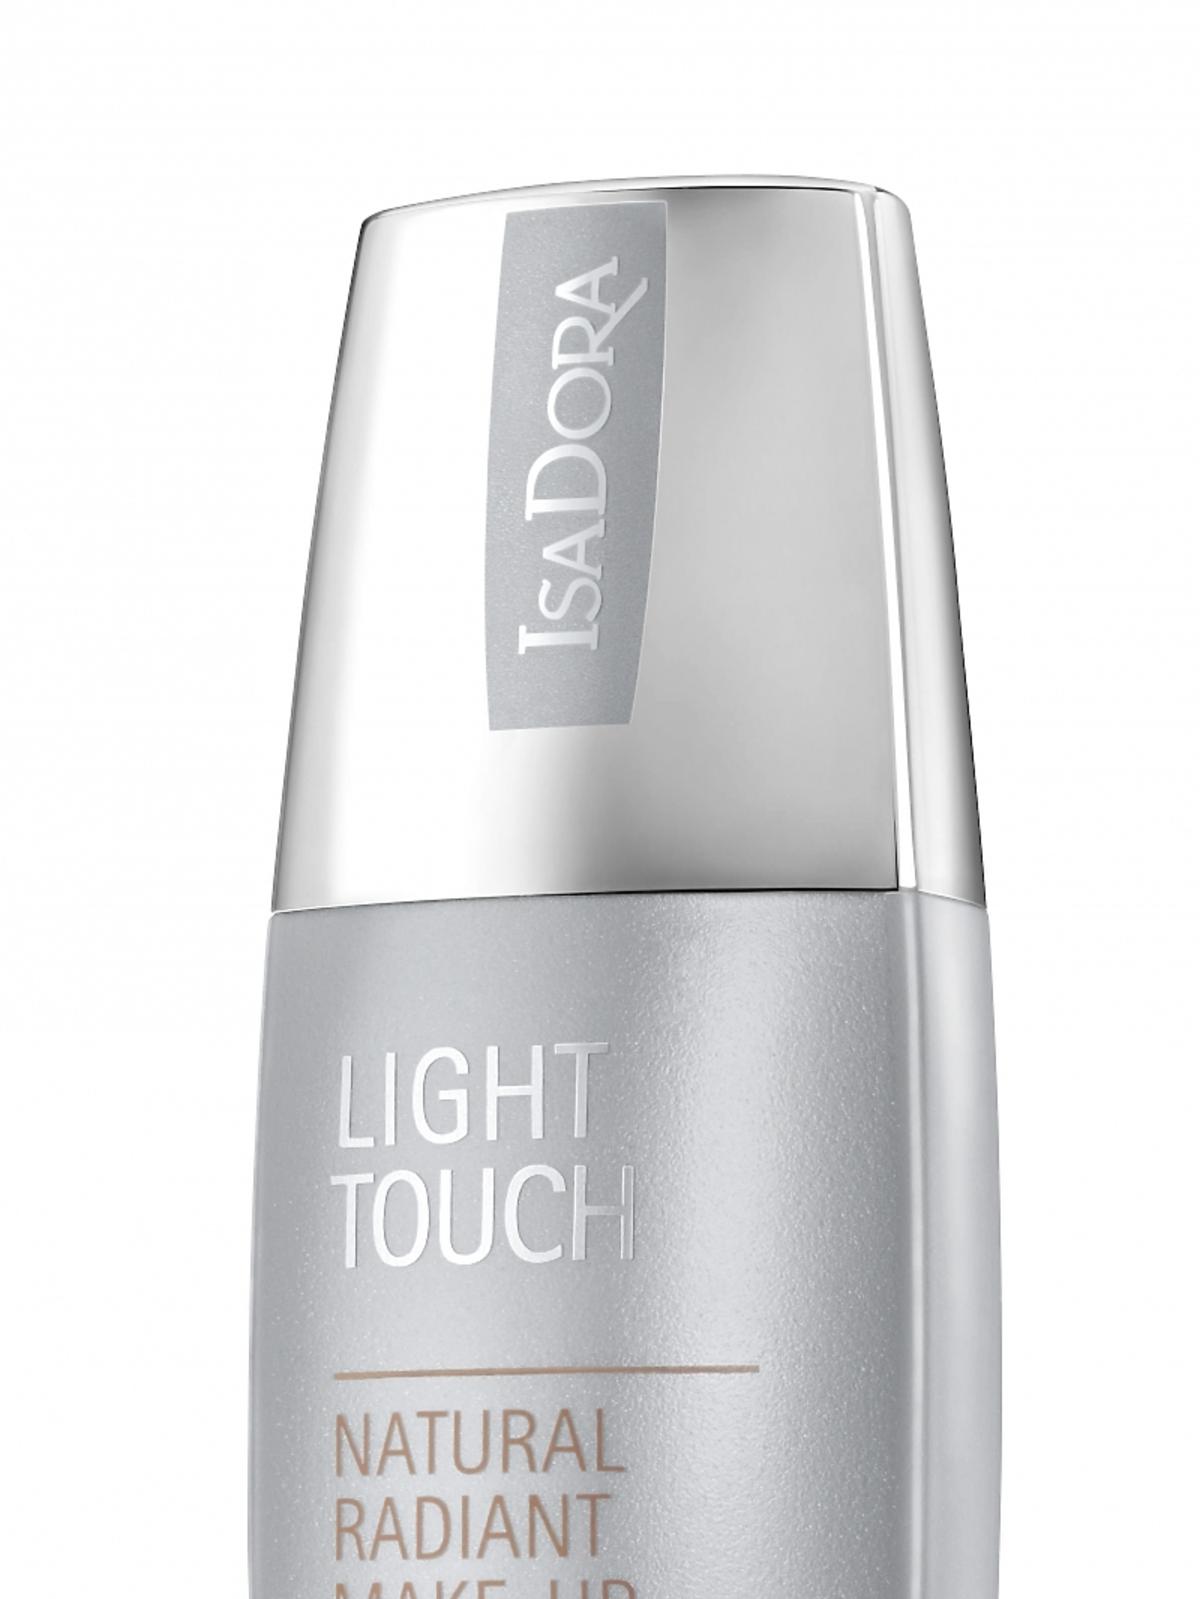 Light Touch Natural Radiant Make-Up.jpg